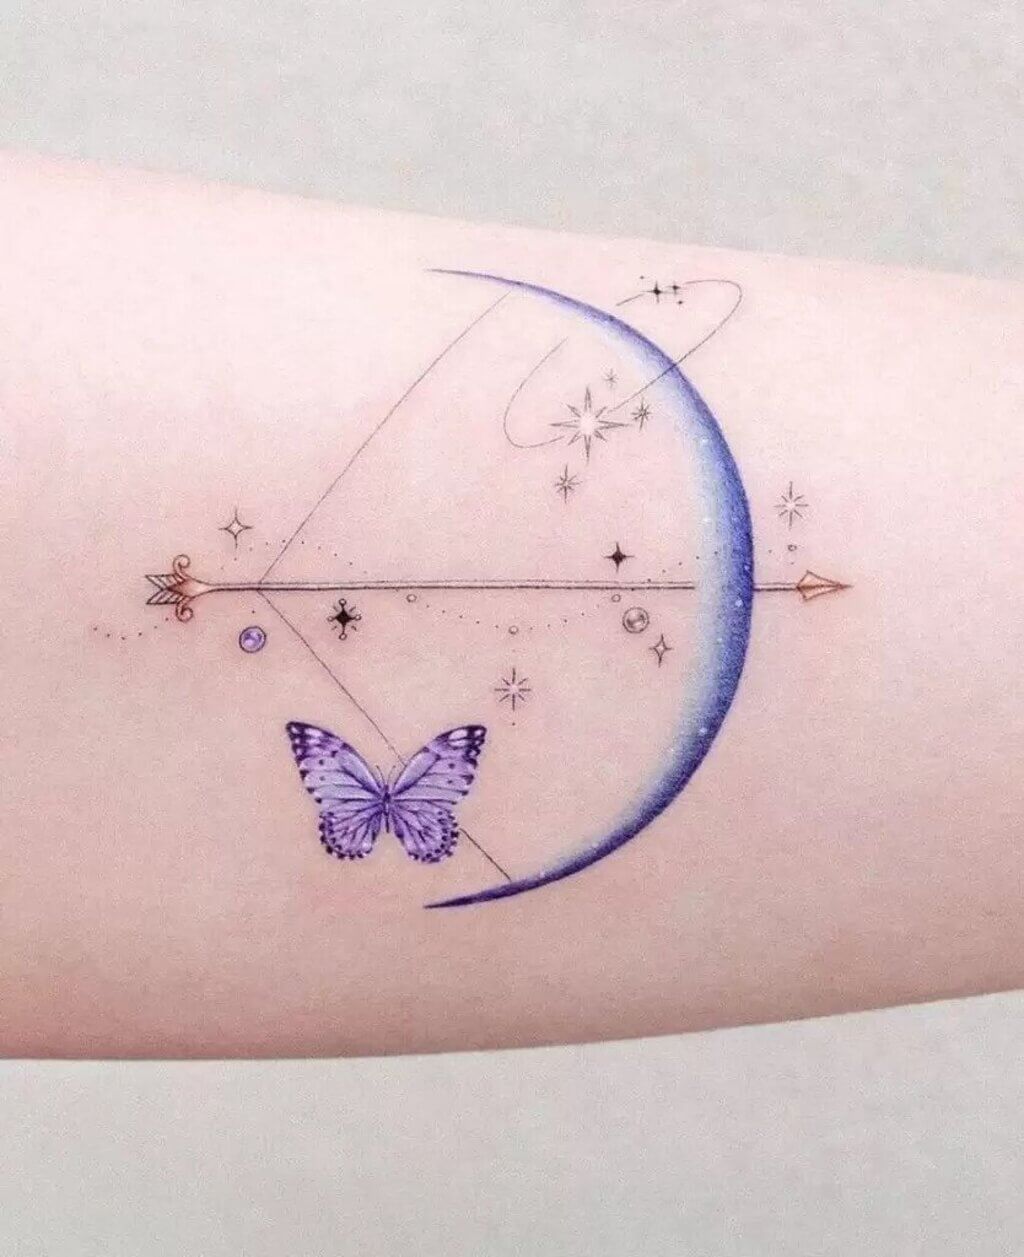 meaningful arrow tattoo